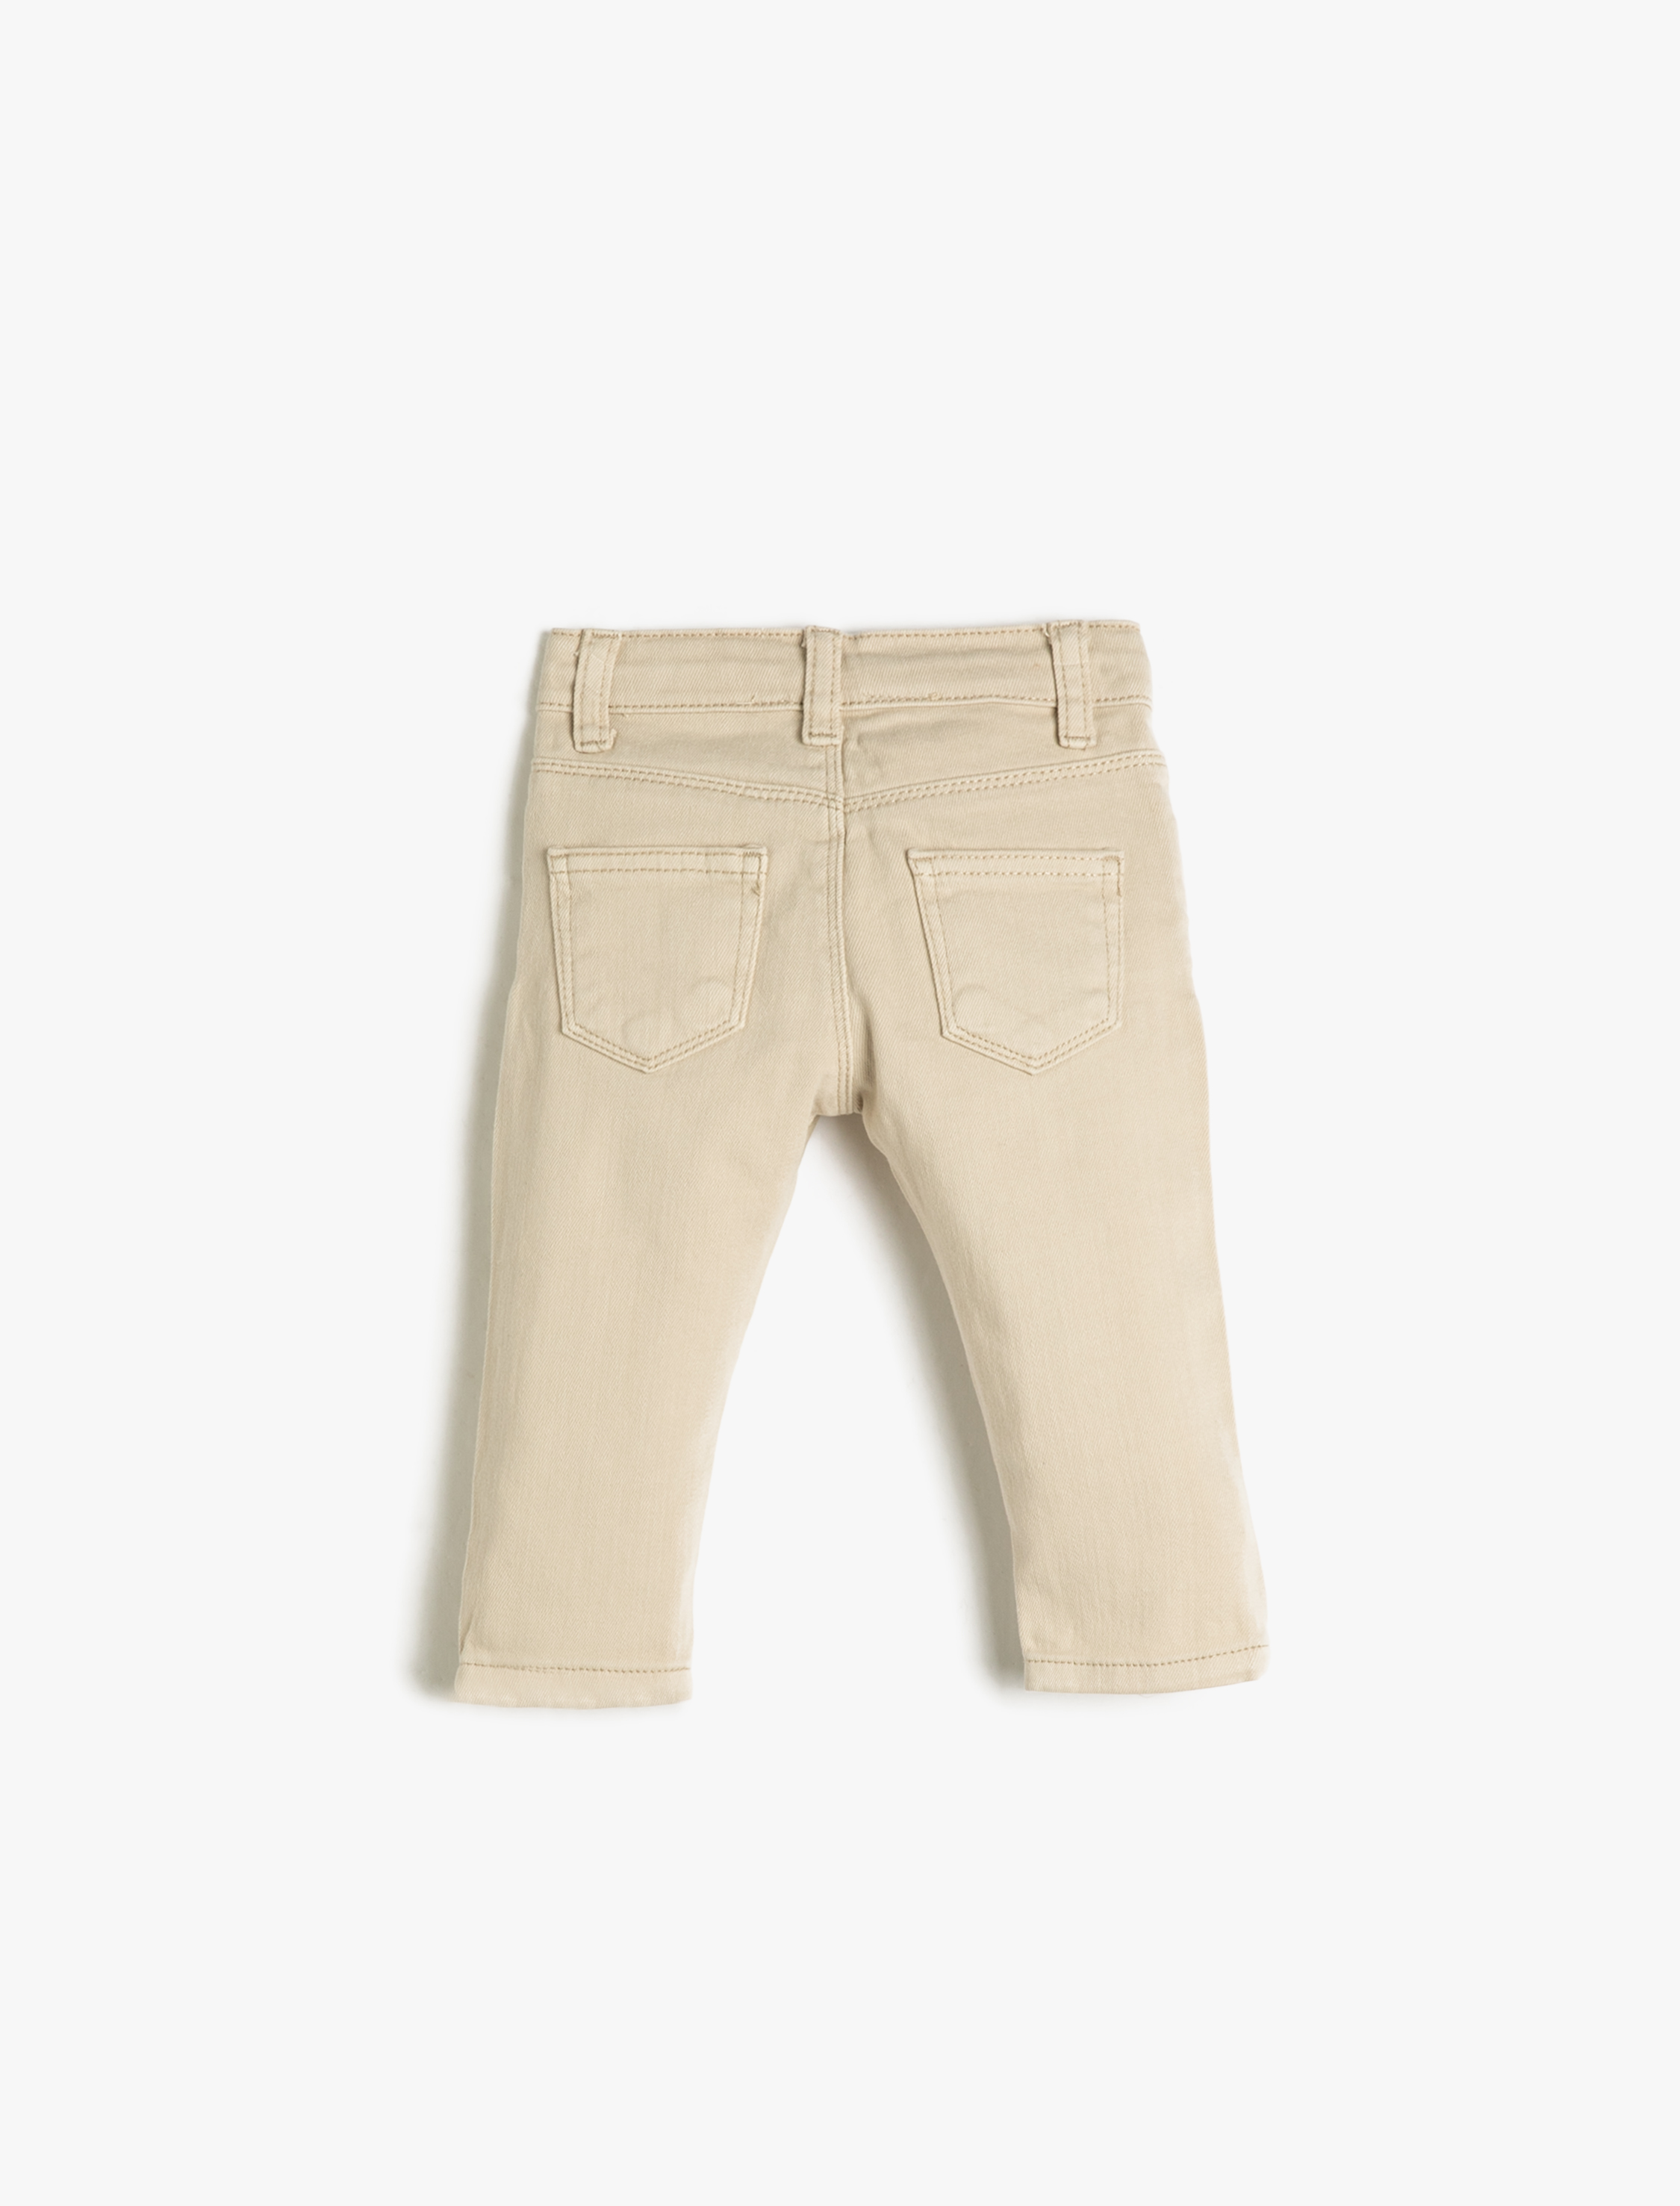 Koton Kot Pantolon Slim Fit Cepli Pamuklu Beli Ayarlanabilir Lastikli. 2